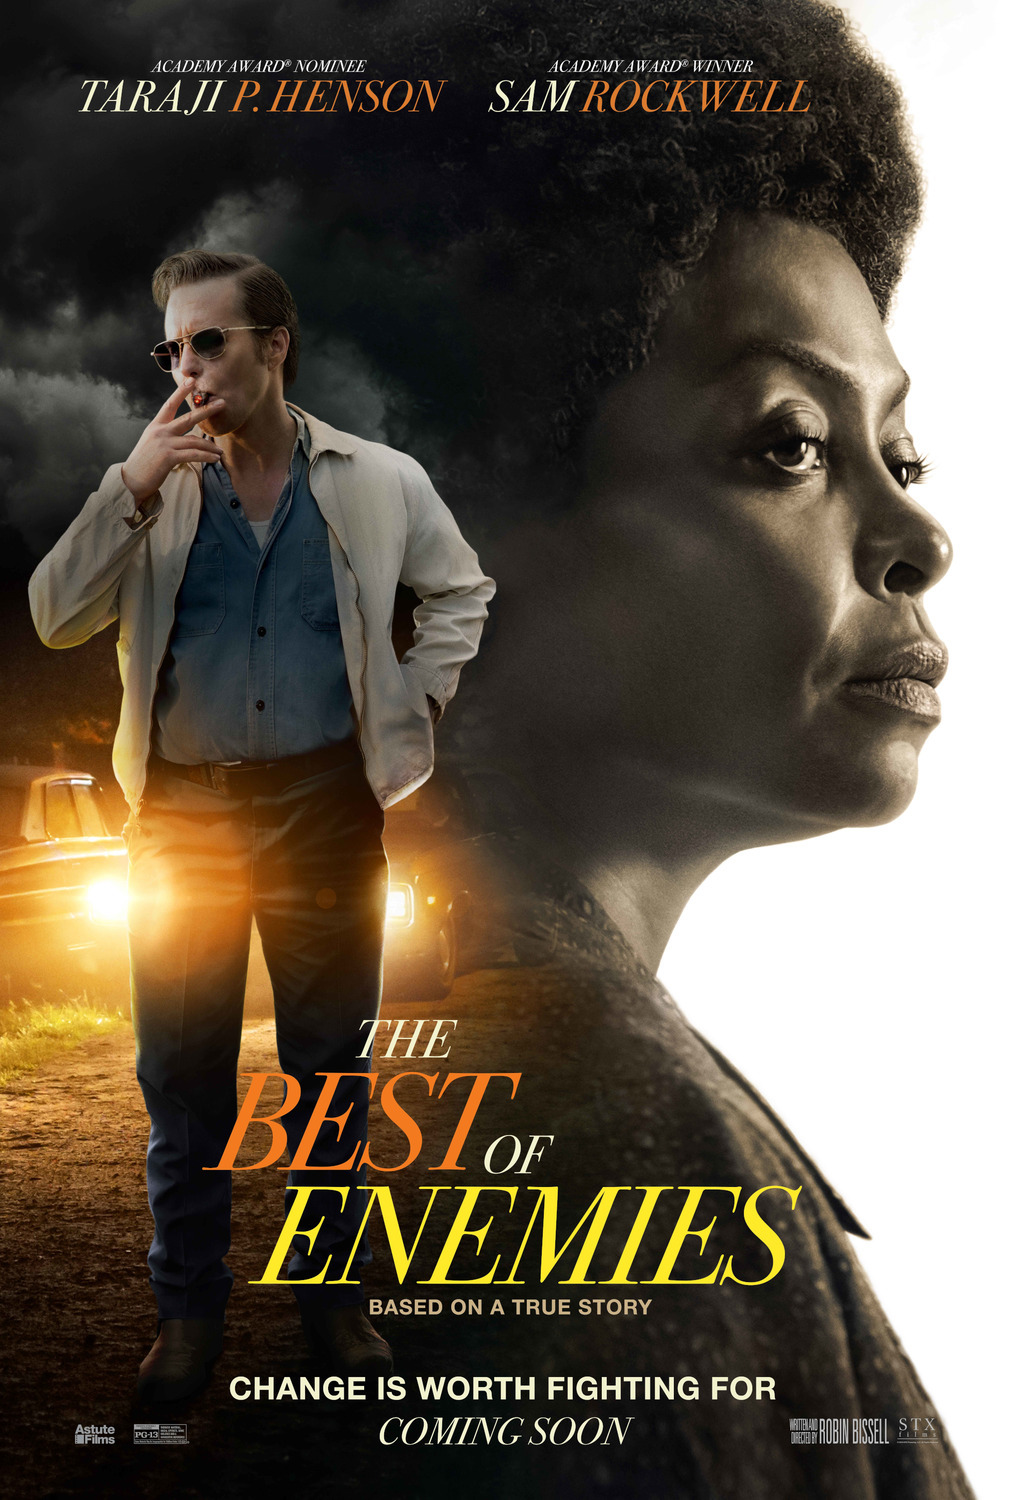 The Best of Enemies film poster